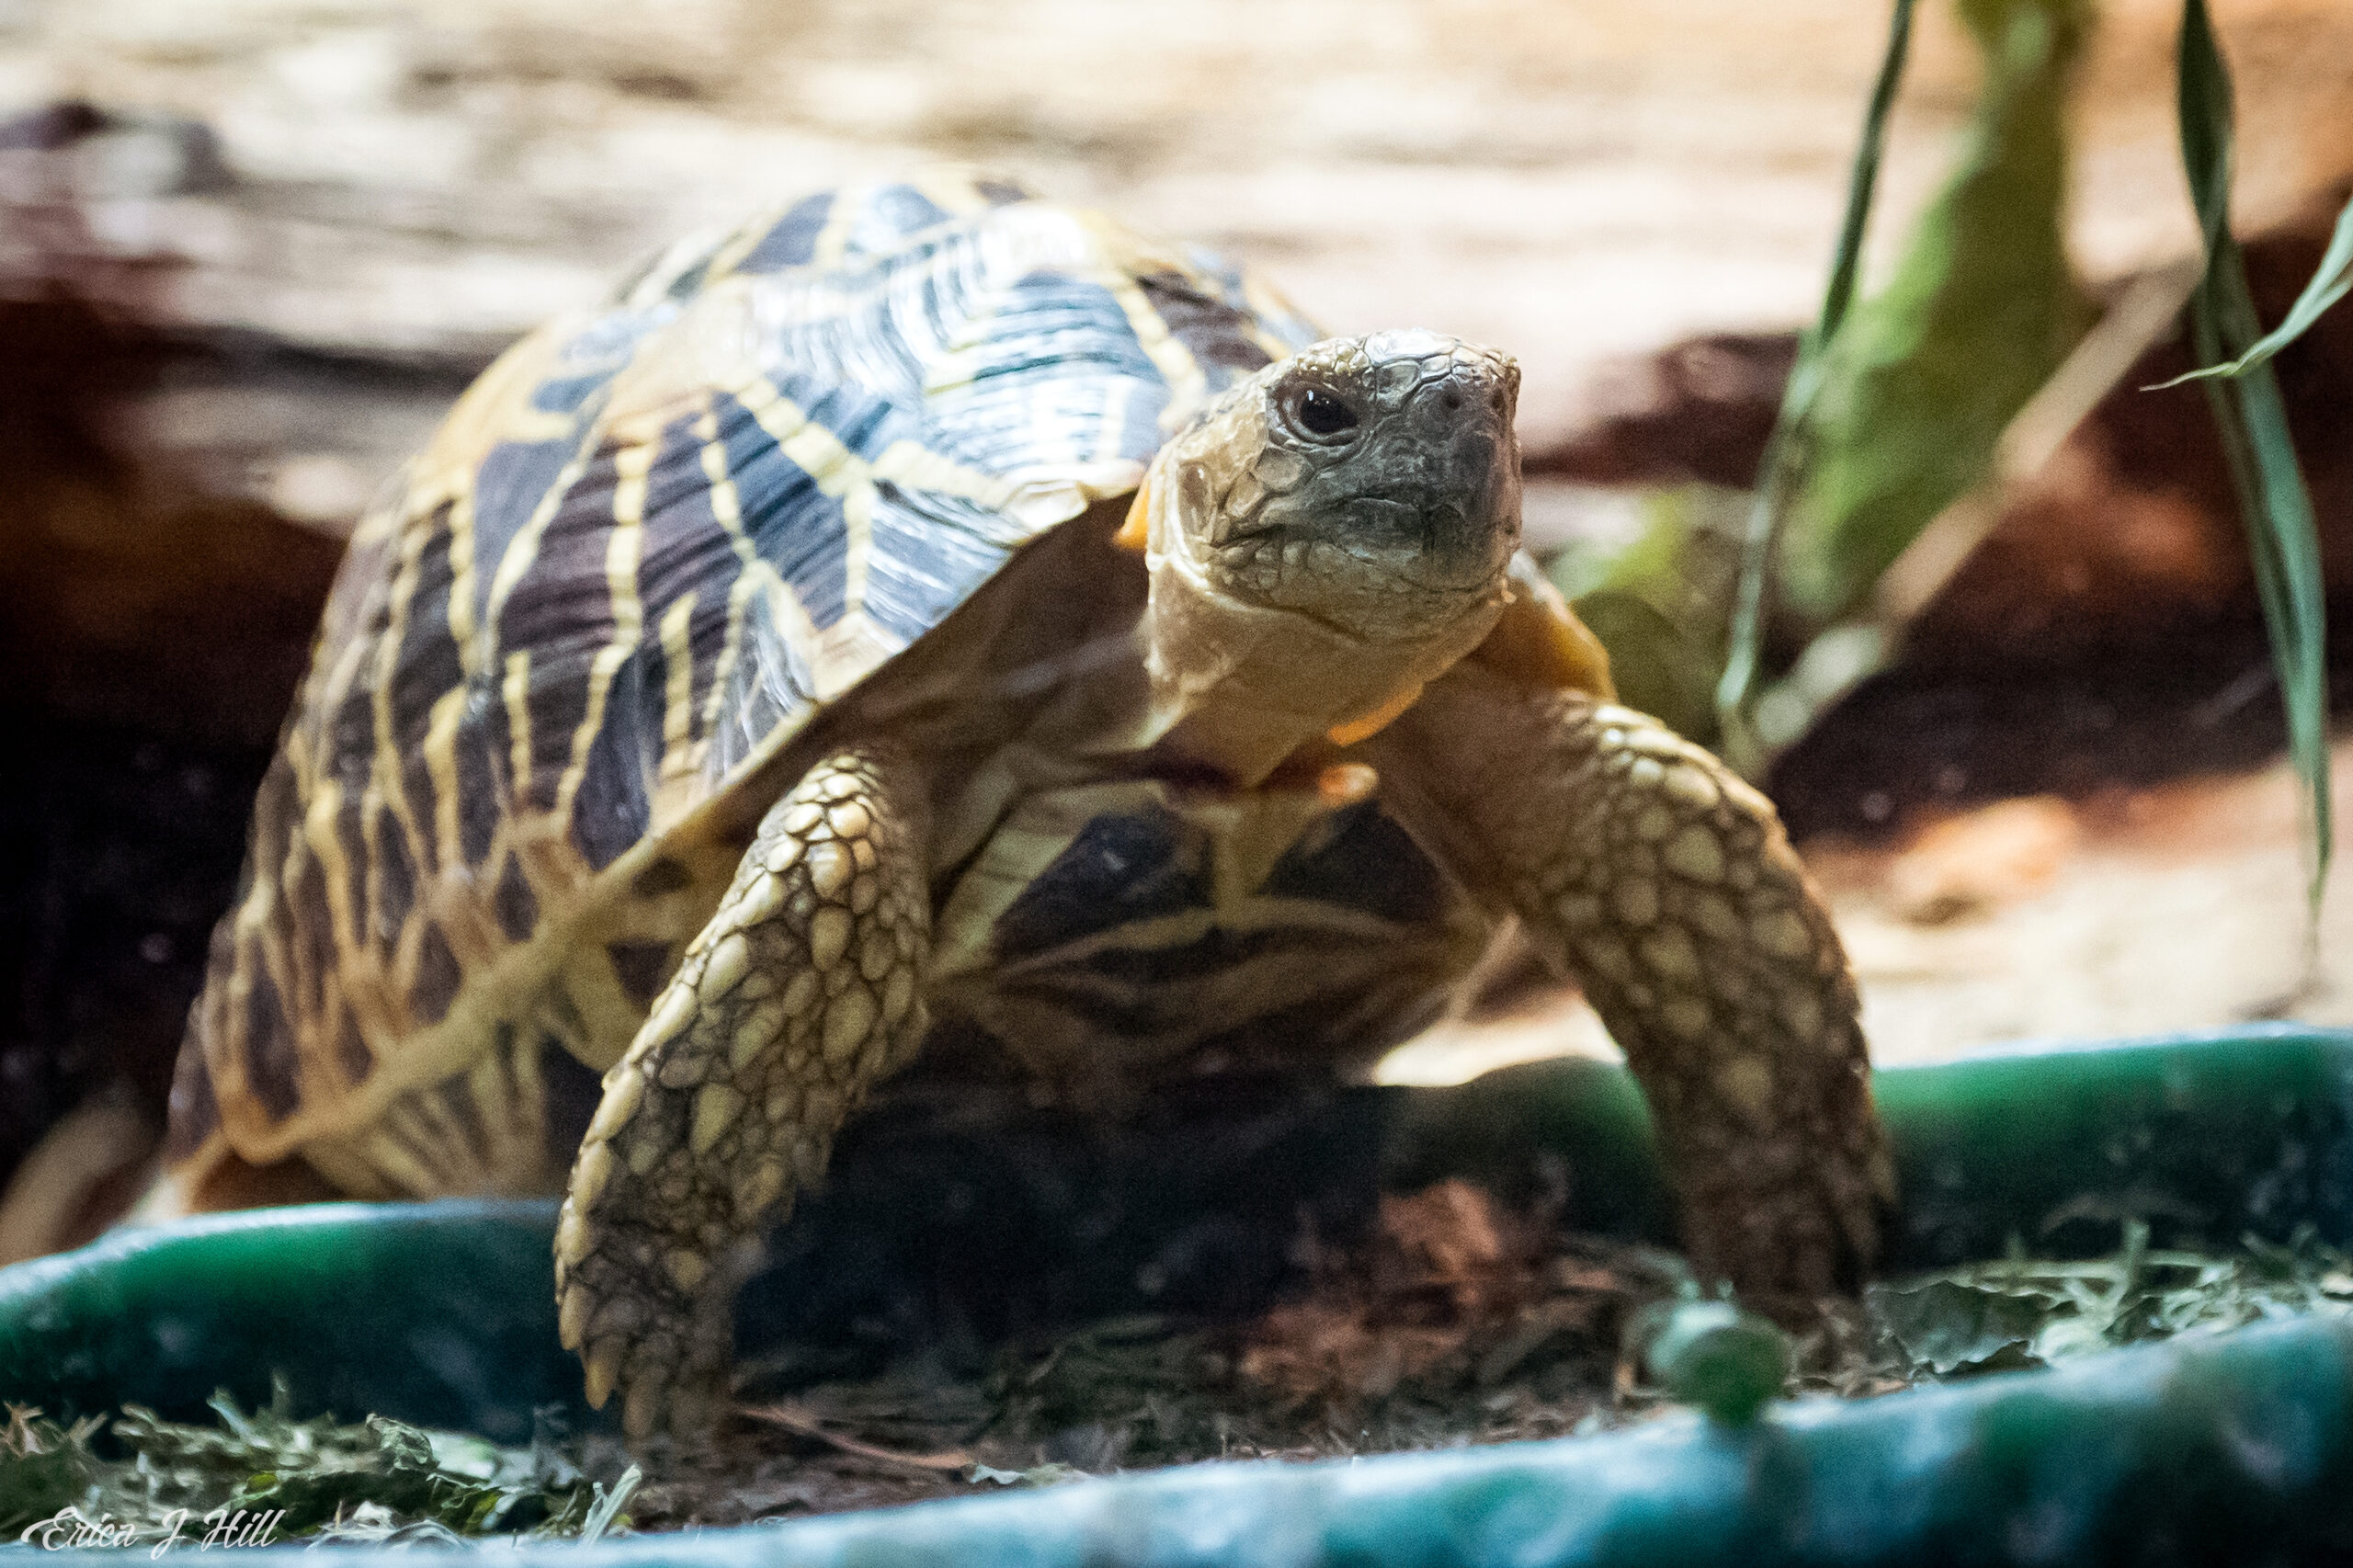 Indian Star Turtle on food bowl in habitat